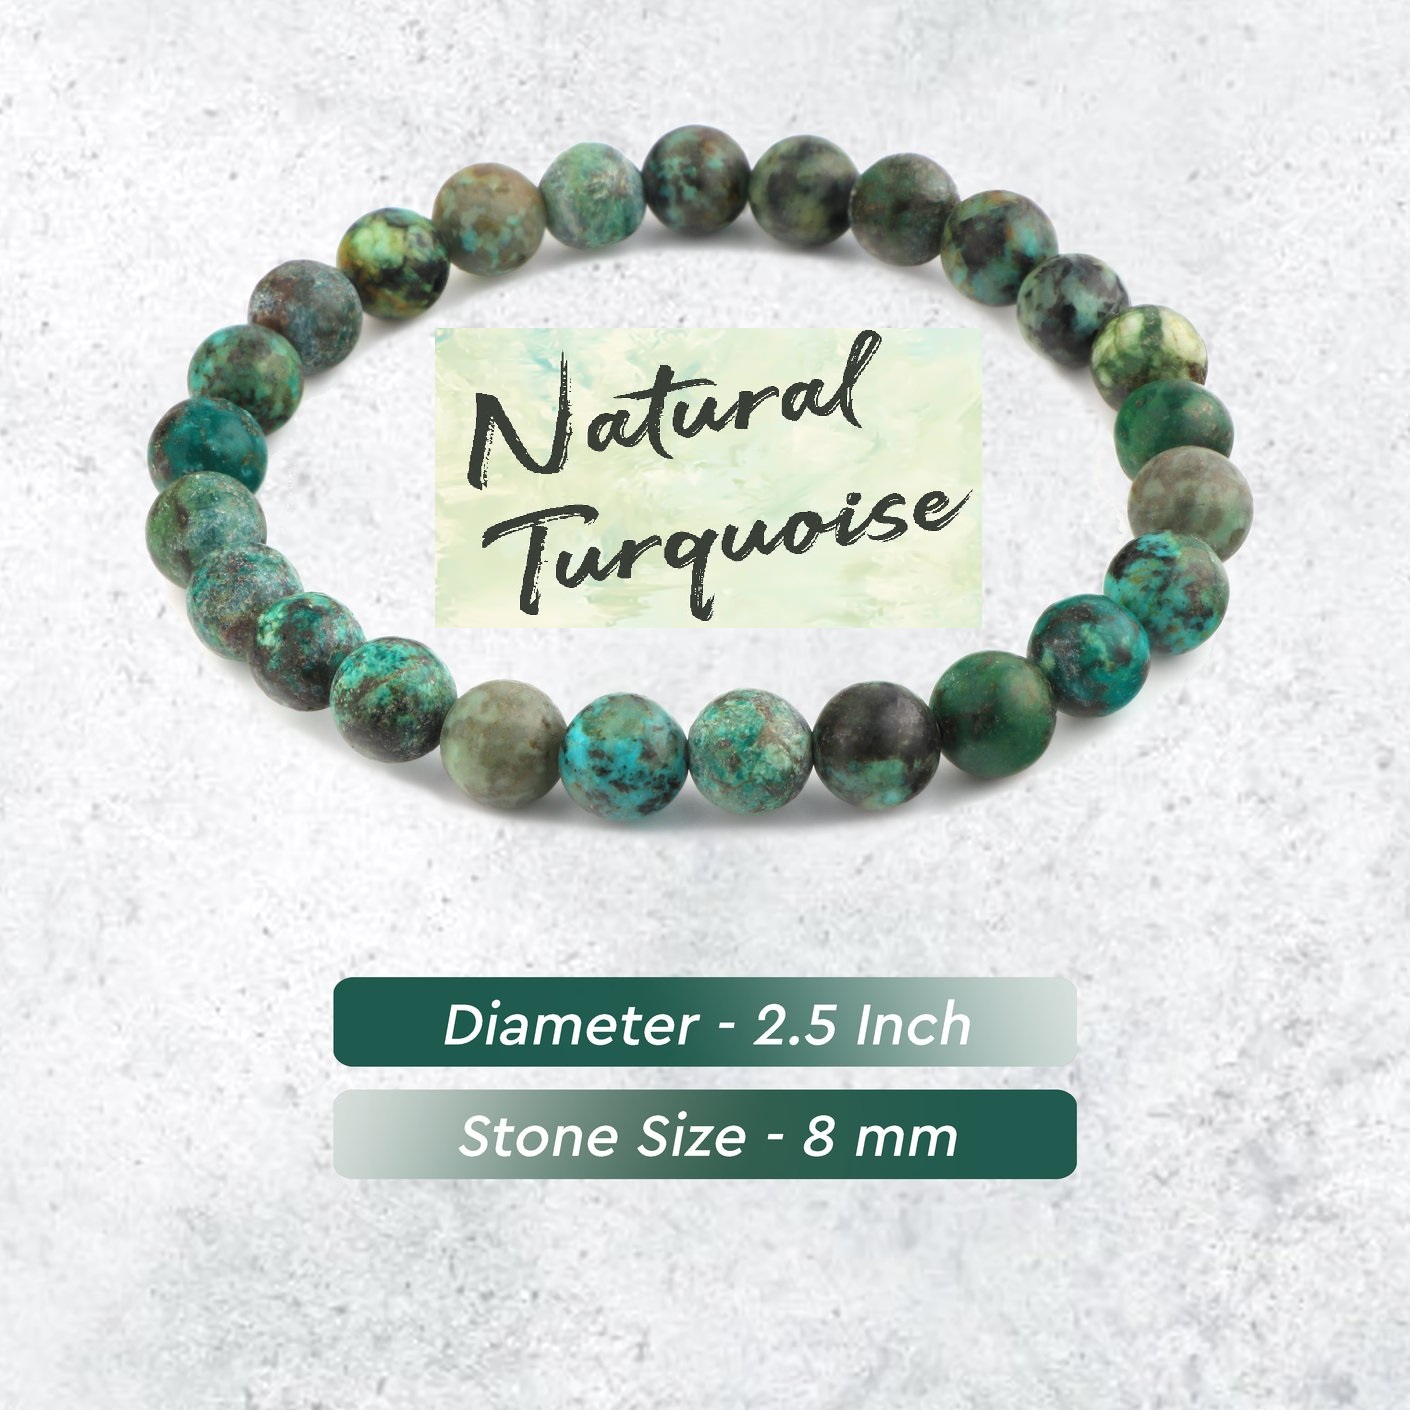 Natural Turquoise & Swarovski Crystal Spanish Crochet Bracelet Tutorial -  Bead World